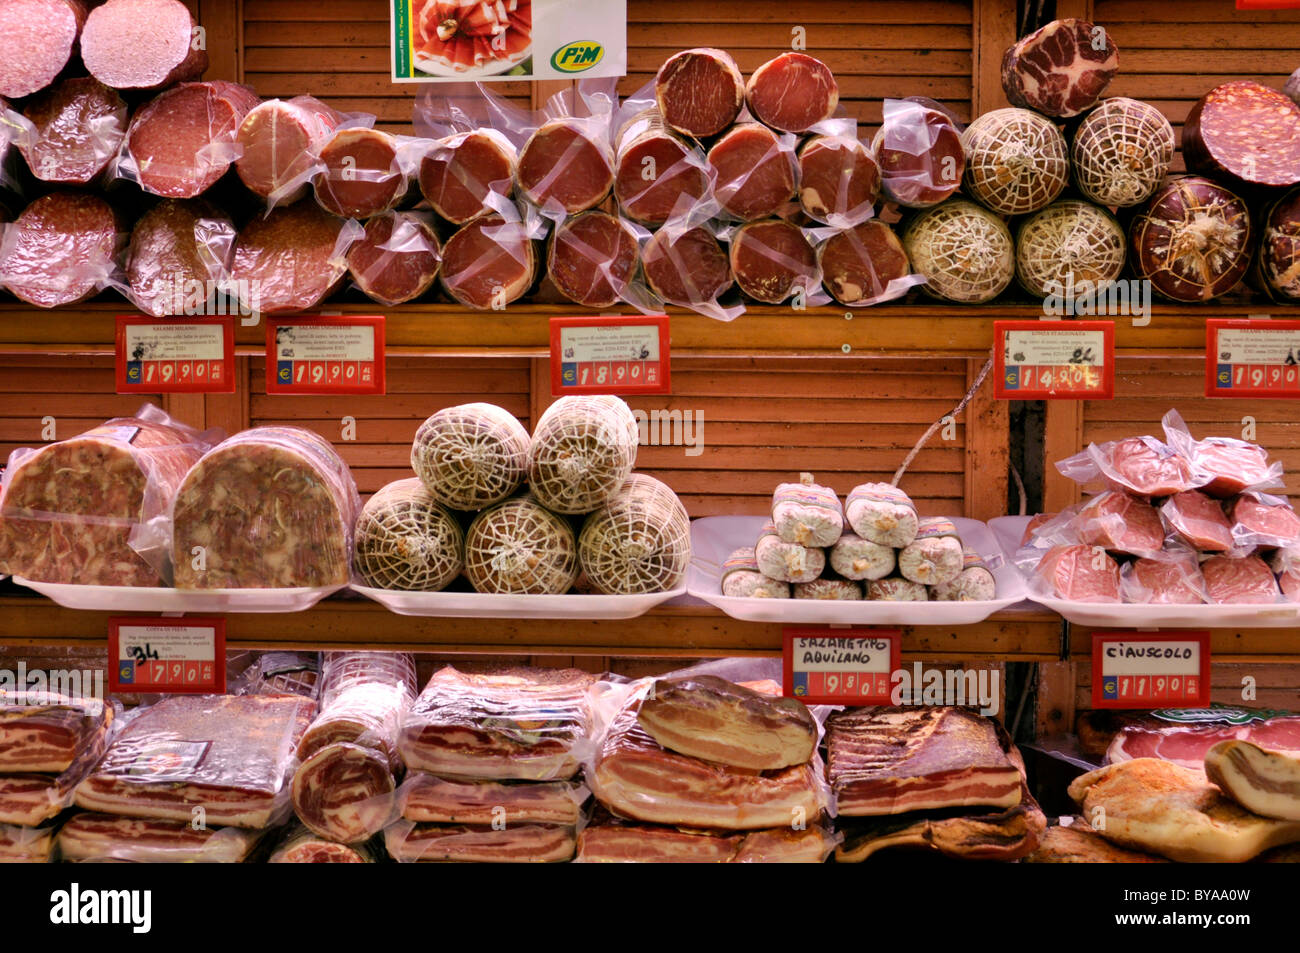 Salami and ham counter in the supermarket, Rome, Lazio, Italy, Europe Stock Photo